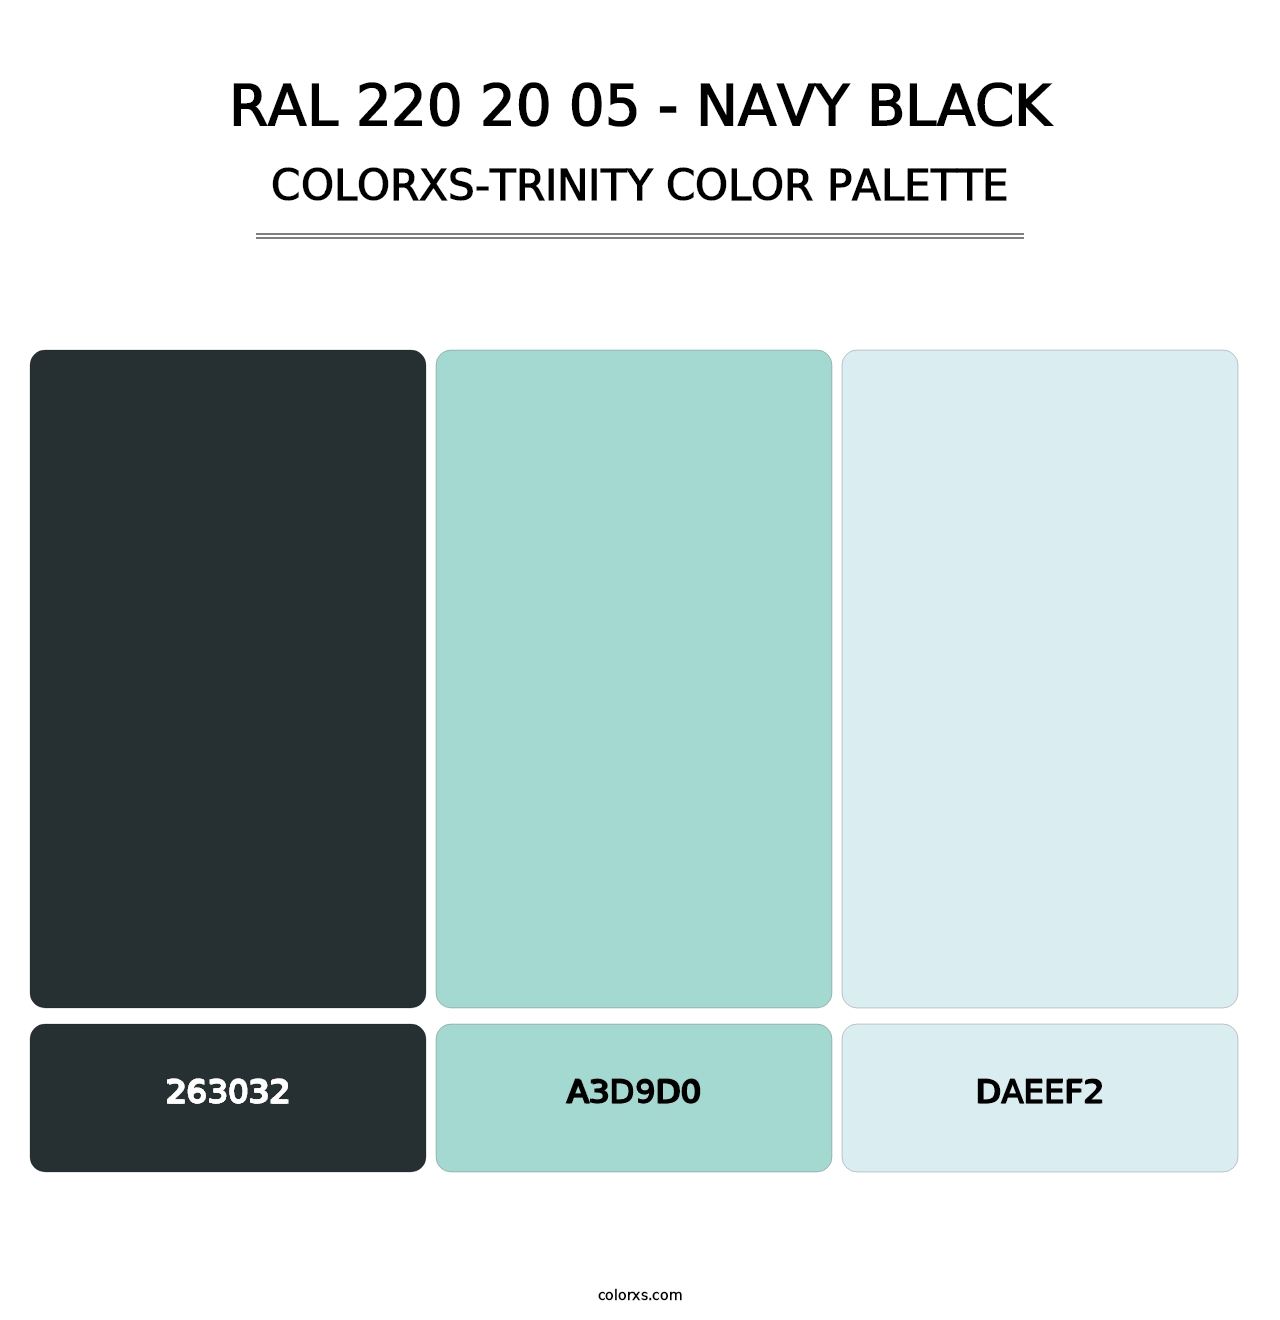 RAL 220 20 05 - Navy Black - Colorxs Trinity Palette